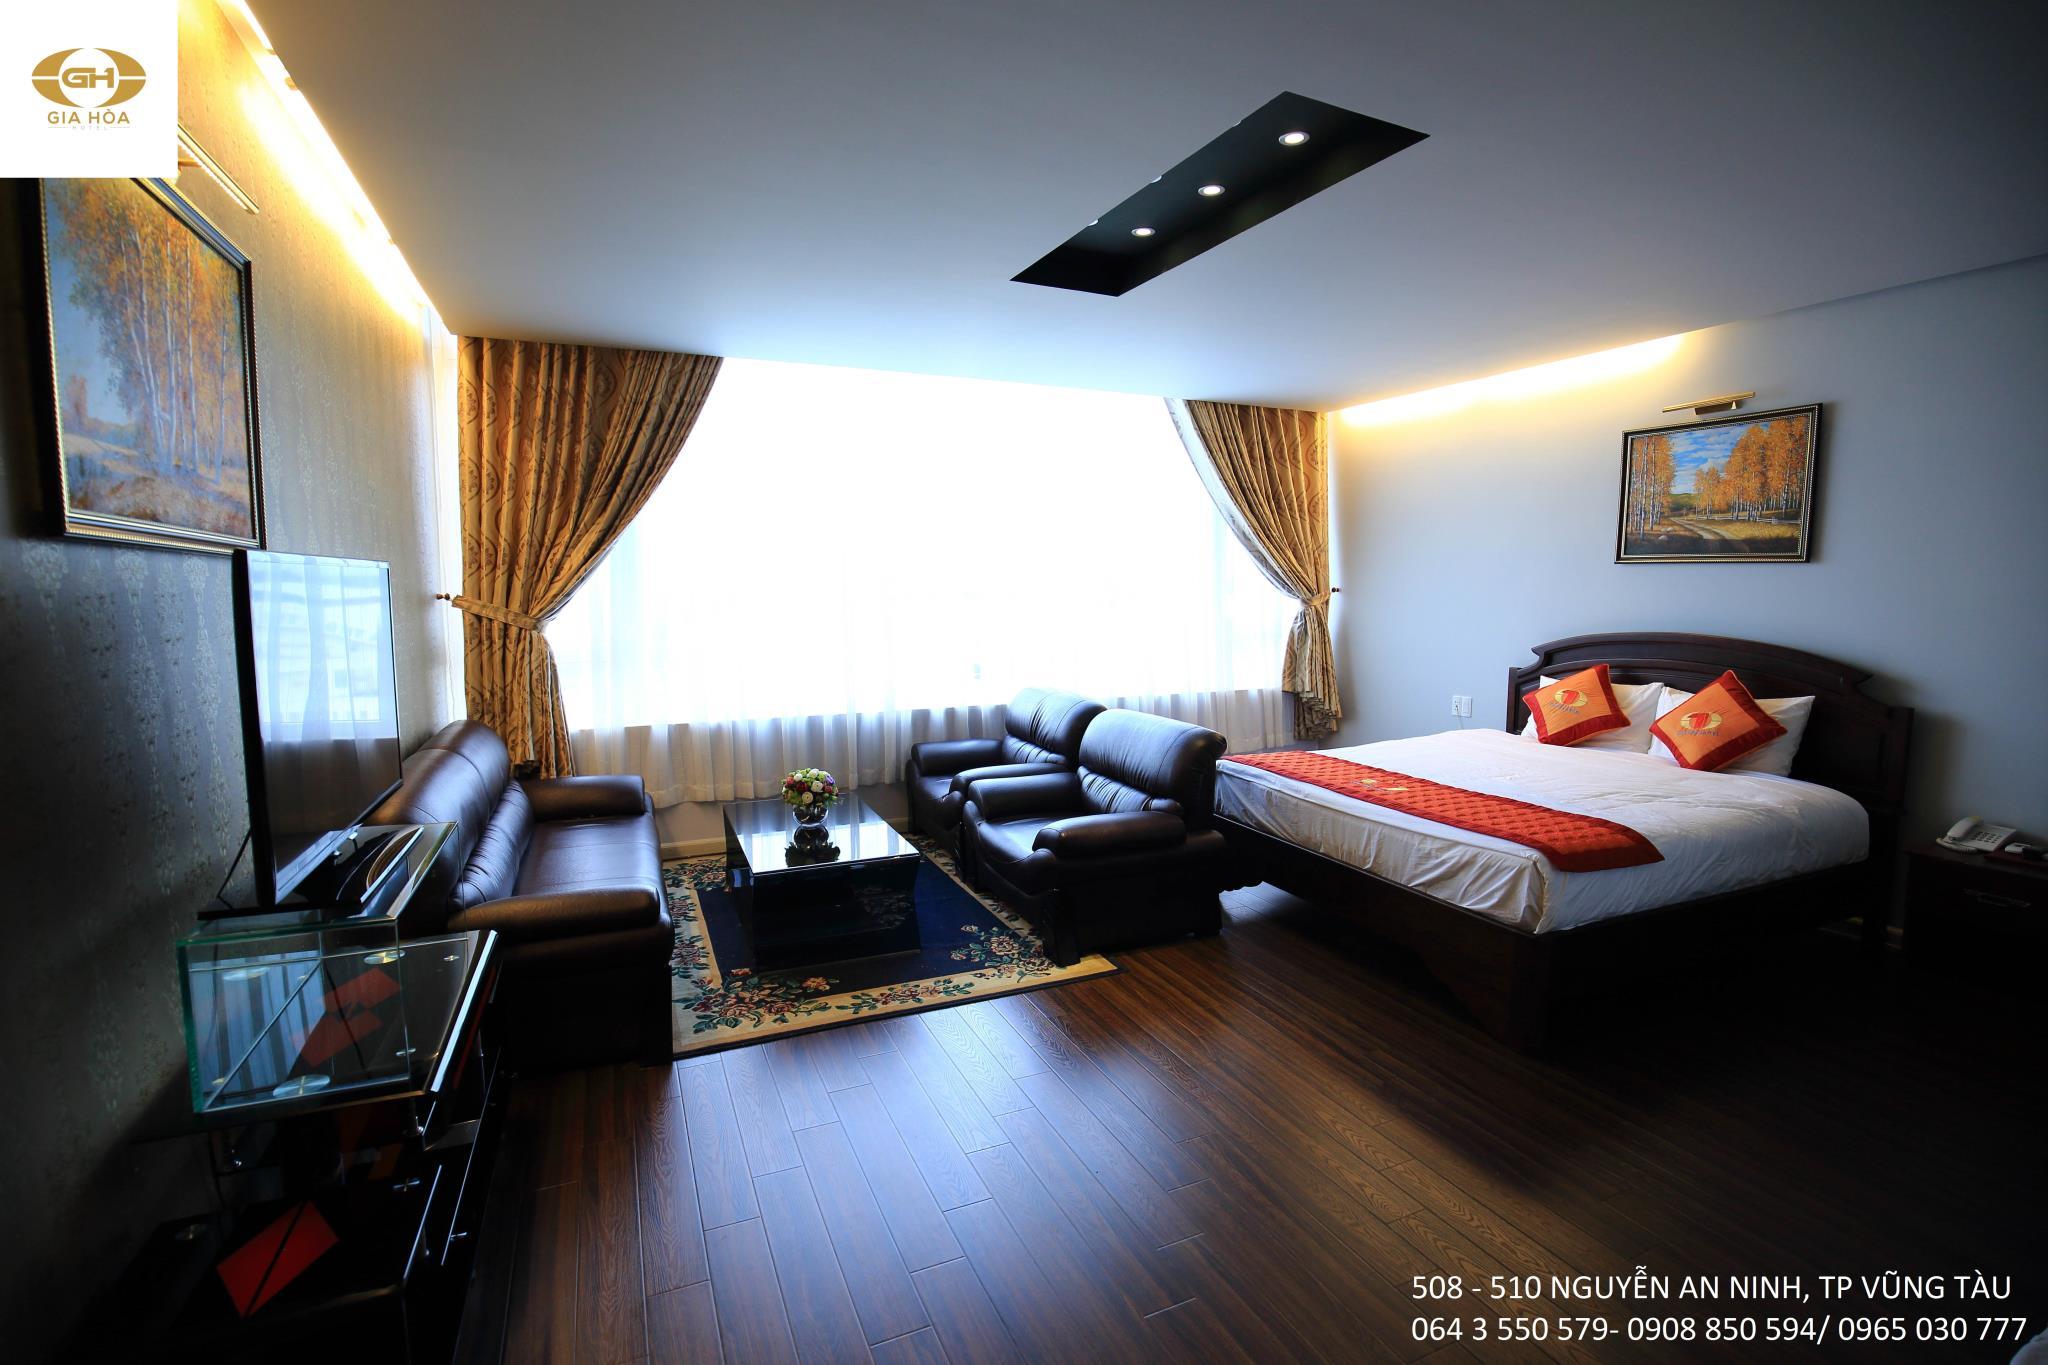 Gia Hoa Hotel image 1